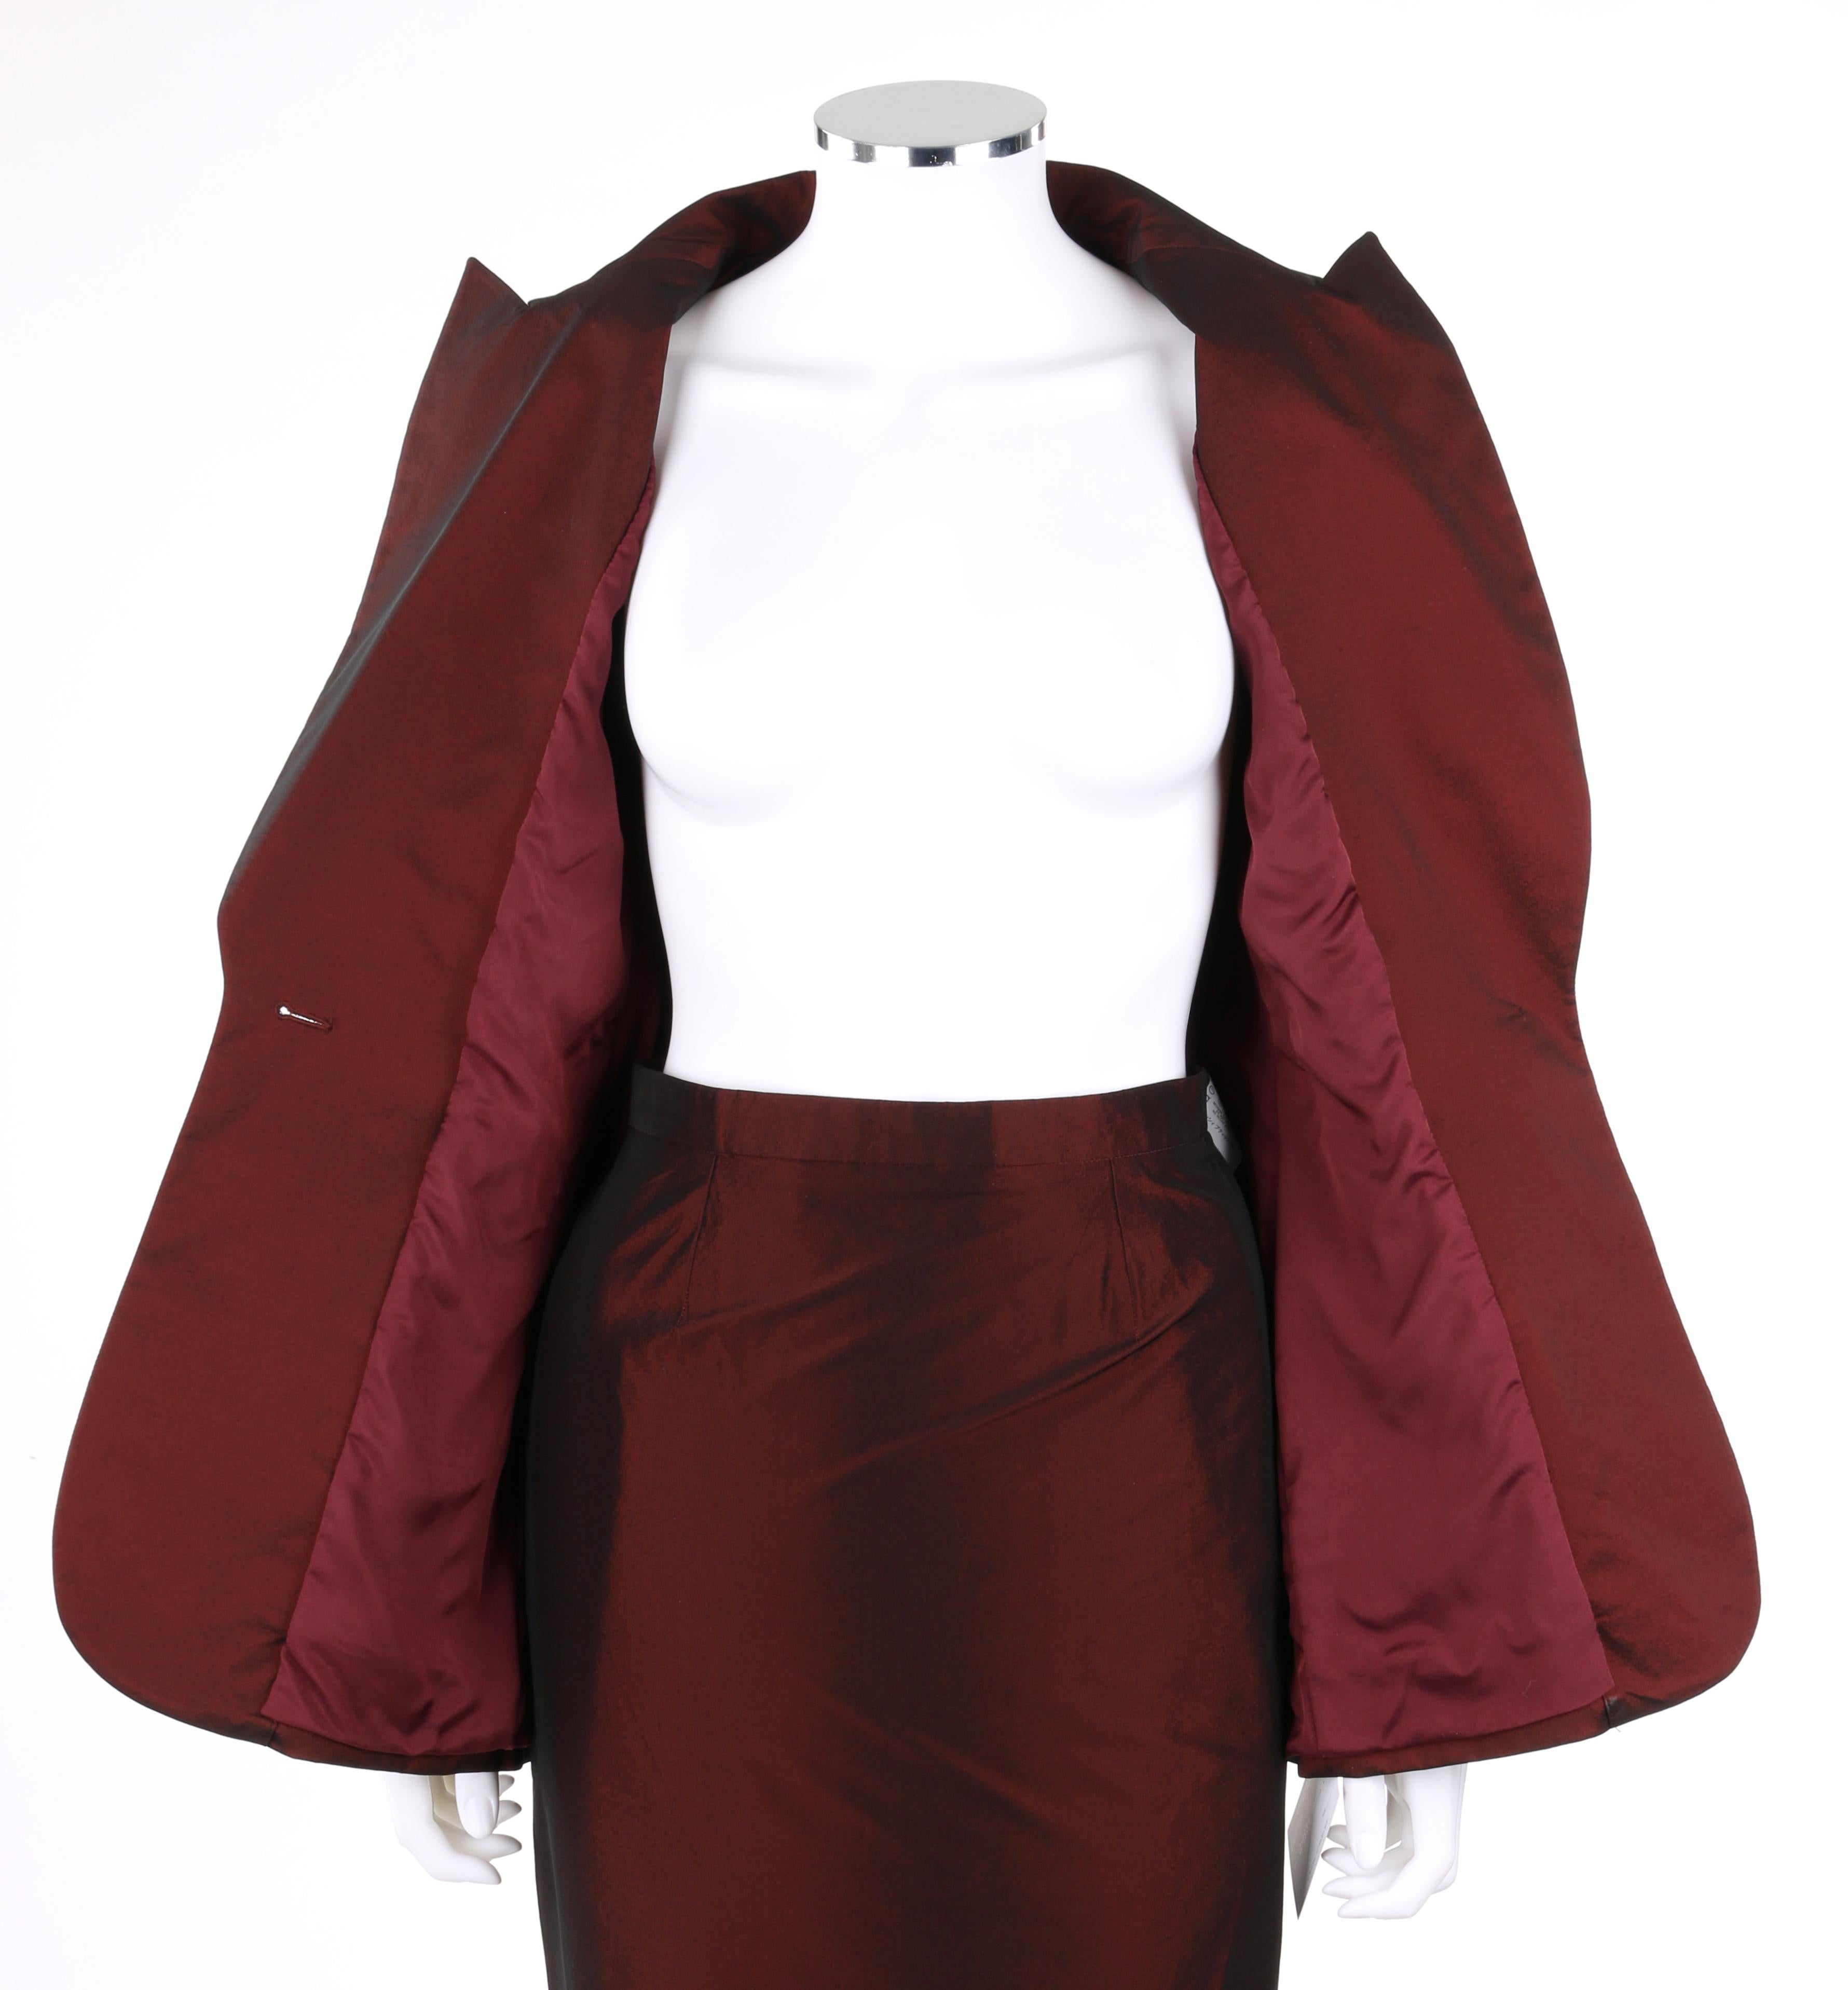 Women's GIVENCHY Couture S/S 1998 ALEXANDER McQUEEN 3 Piece Suit Jacket Skirt Pant Set